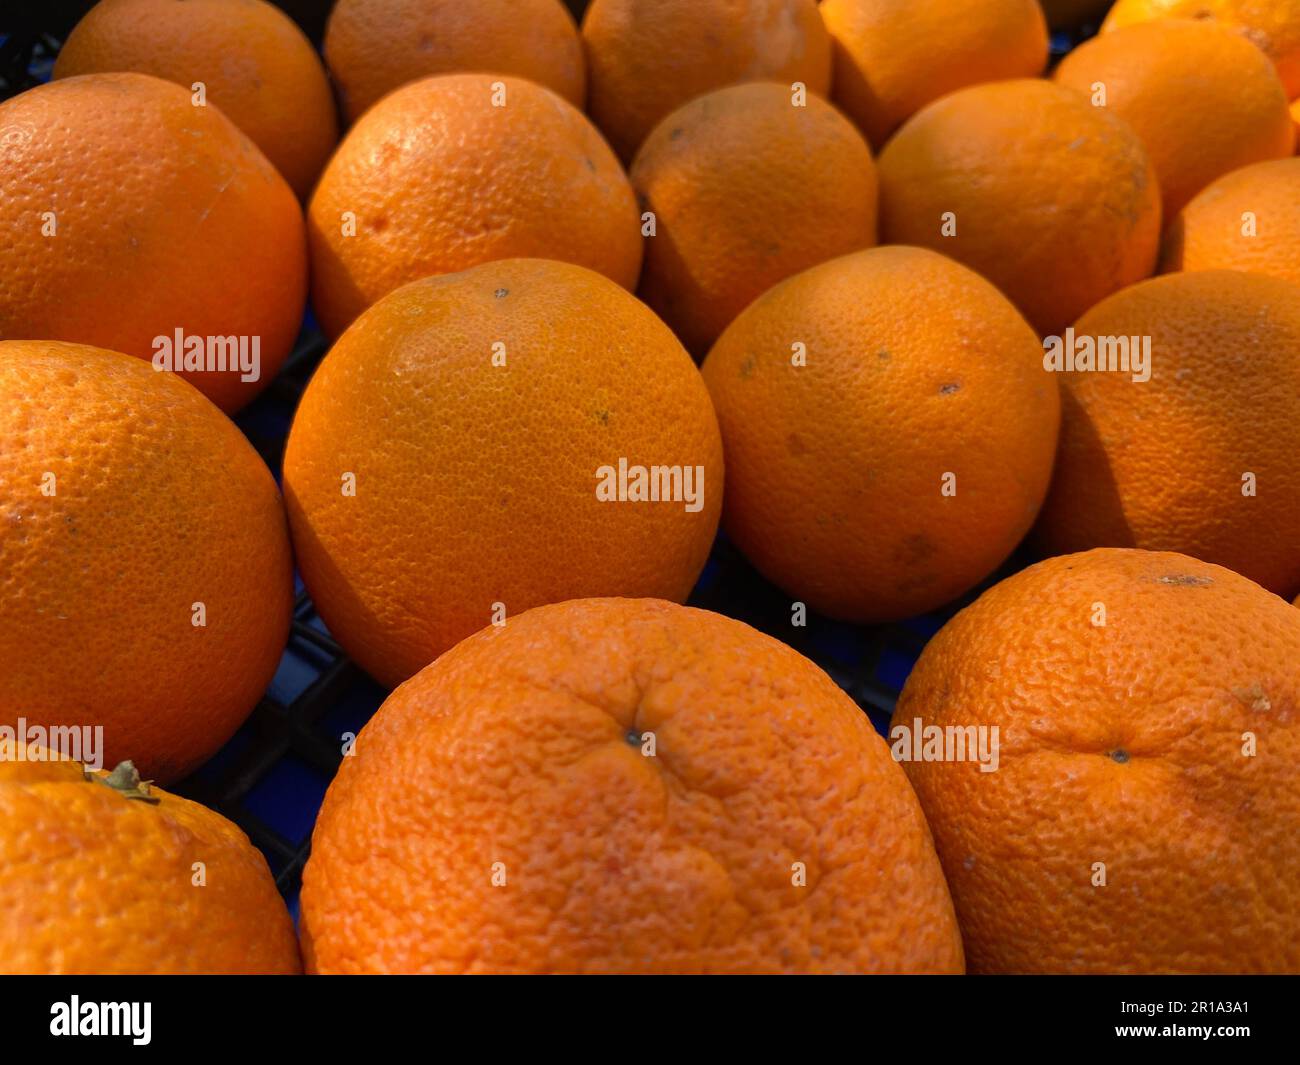 https://c8.alamy.com/comp/2R1A3A1/fresh-tangerines-on-a-market-stall-2R1A3A1.jpg